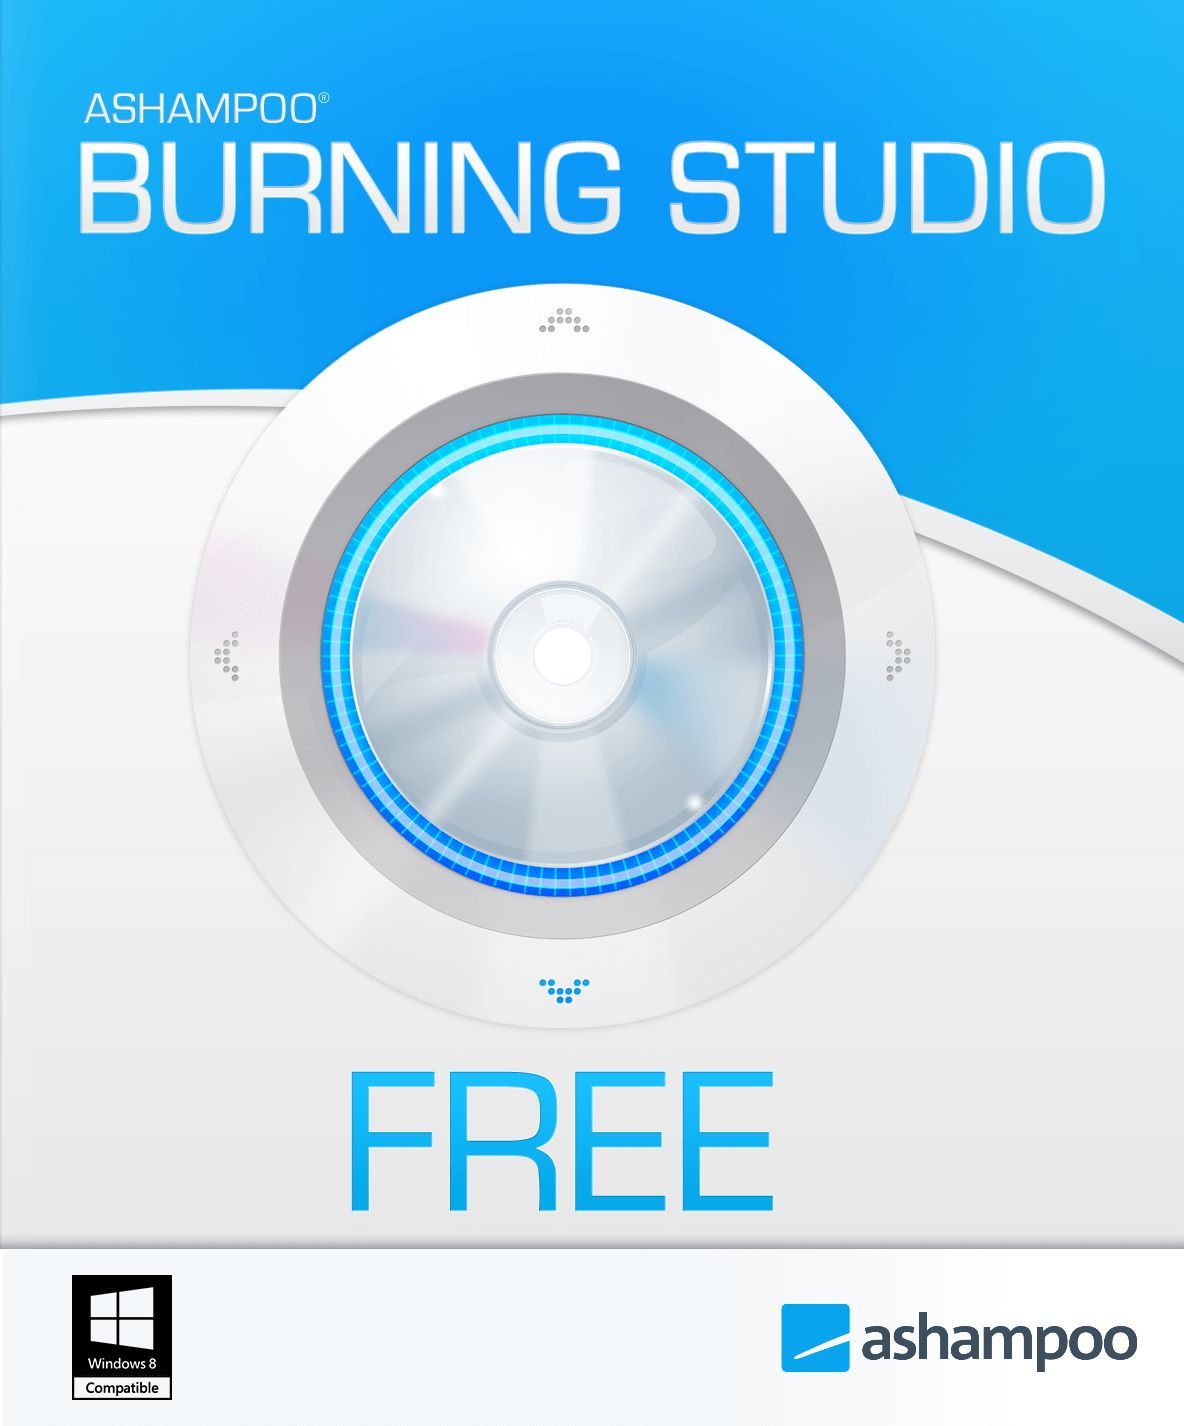 Ashampoo Burning Studio FREE